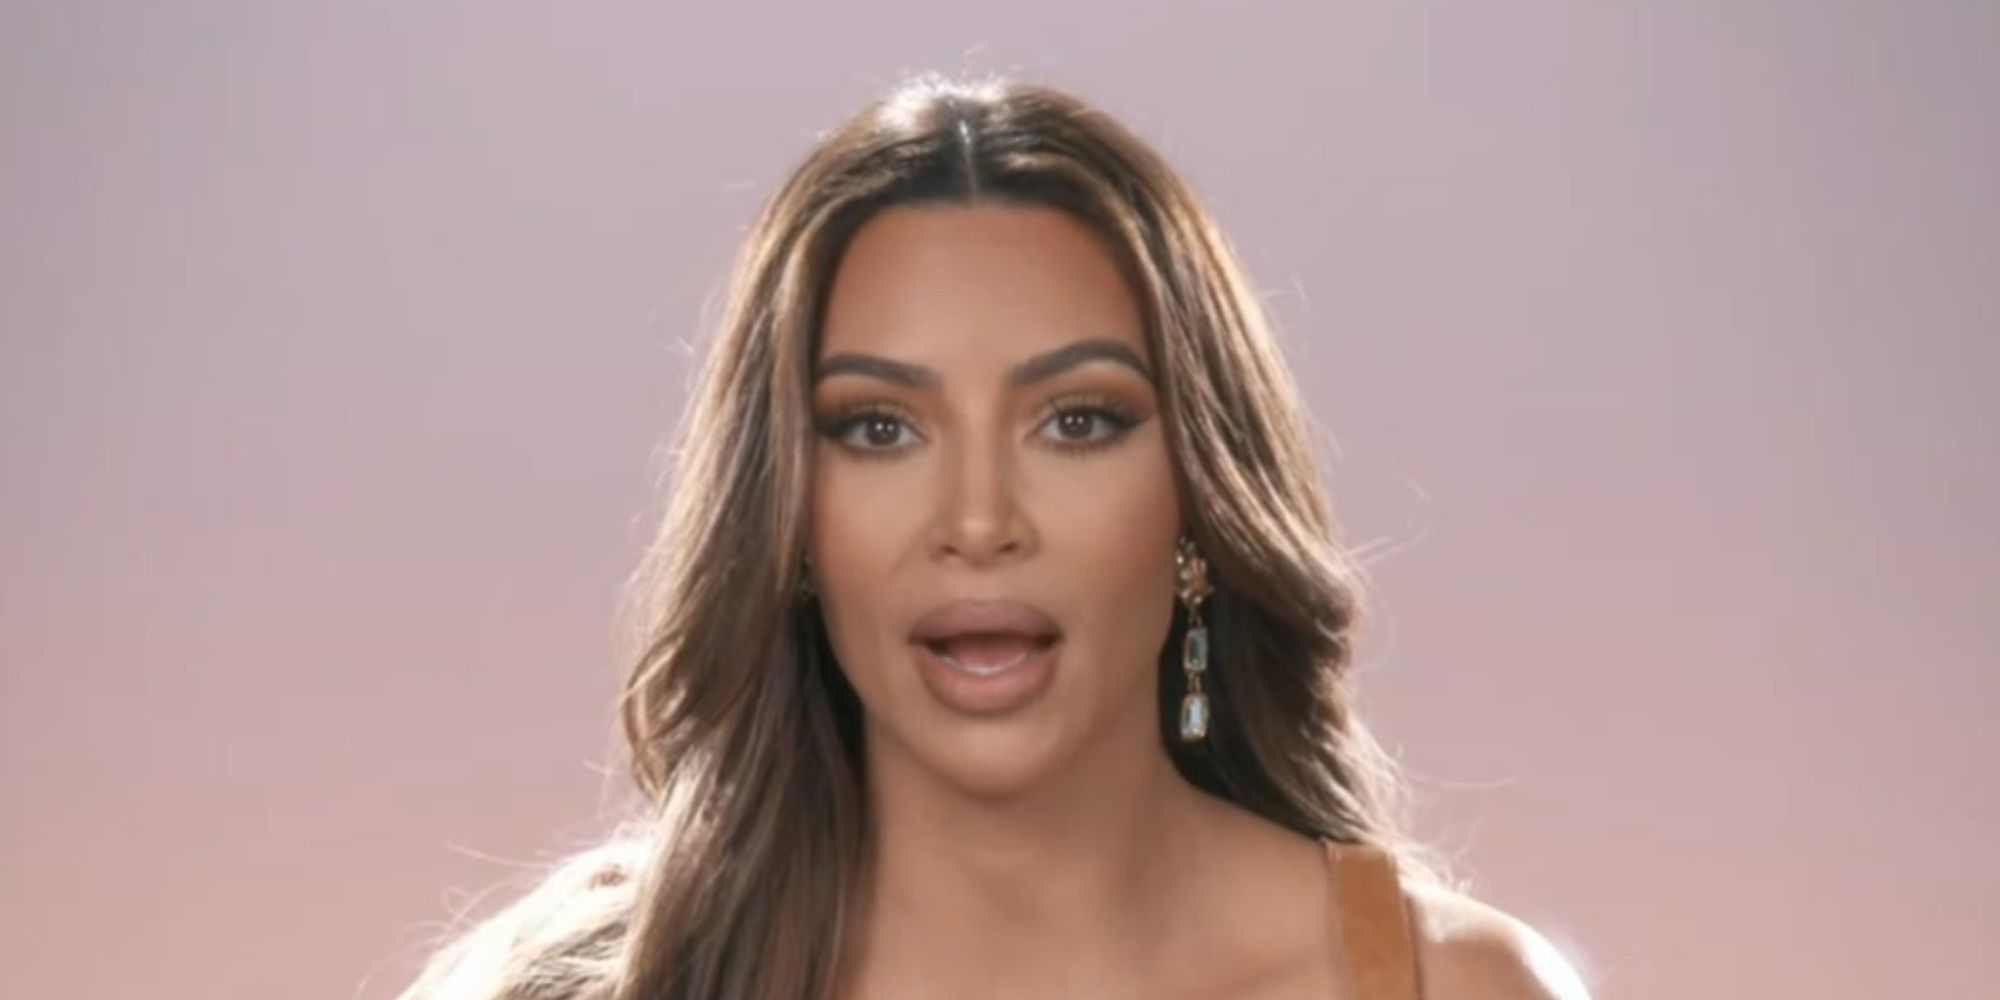 SKKN By Kim - Everything You Need To Know About Kim Kardashian's KKW Rebrand